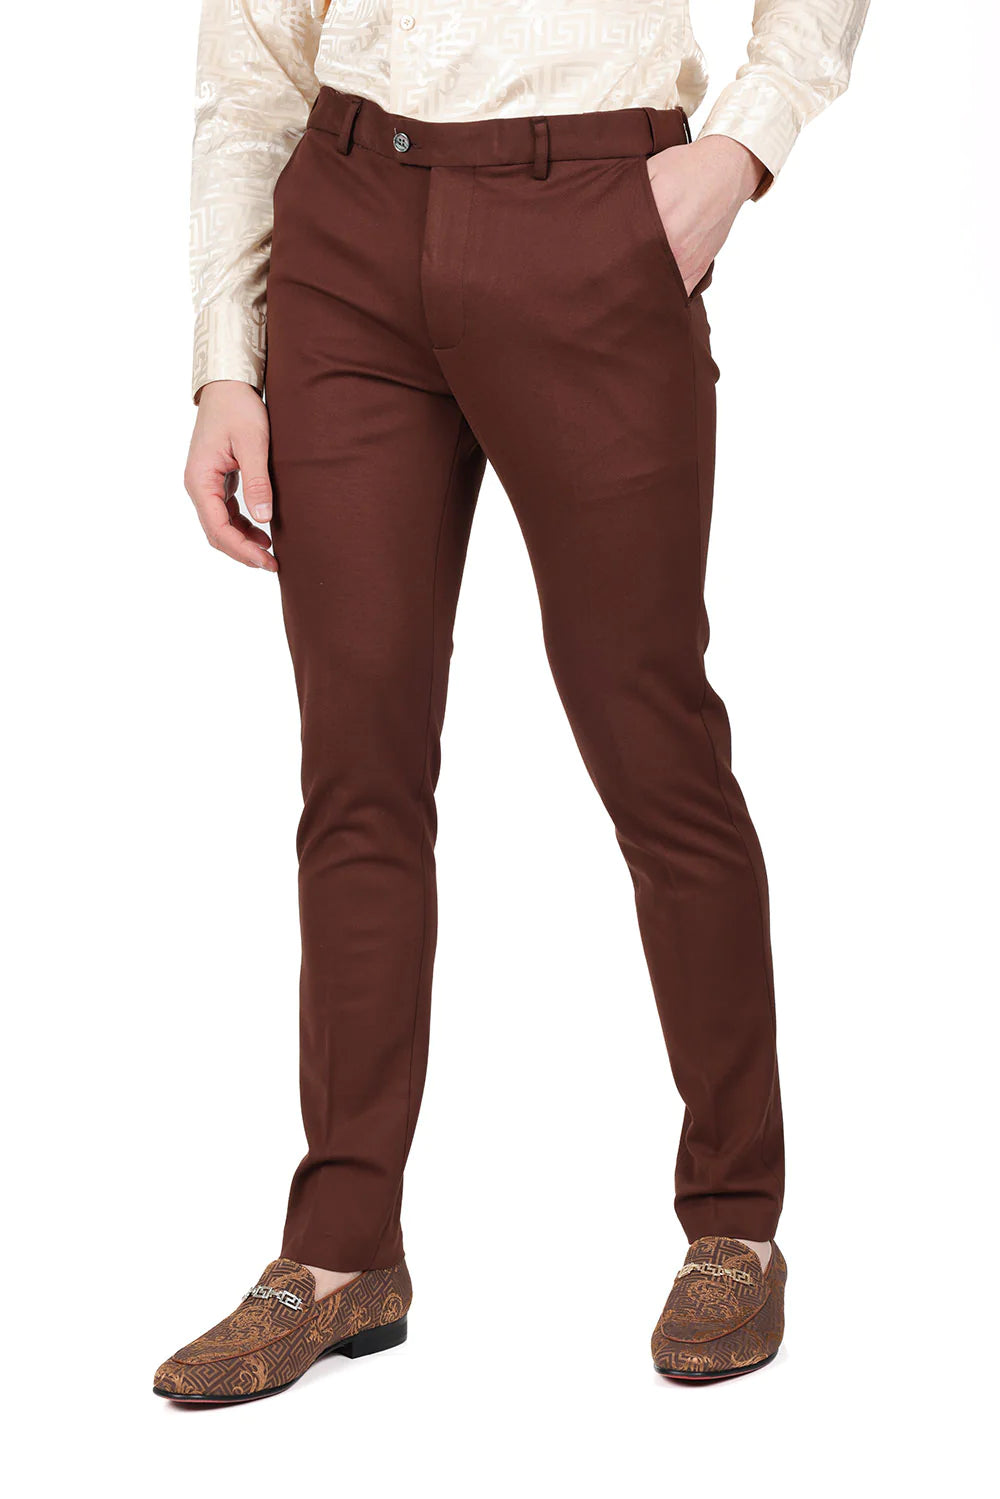 Barabas Men's Solid Color Basic Essential Chino Dress Pants DRESS PANTS Barabas Collection Vercini